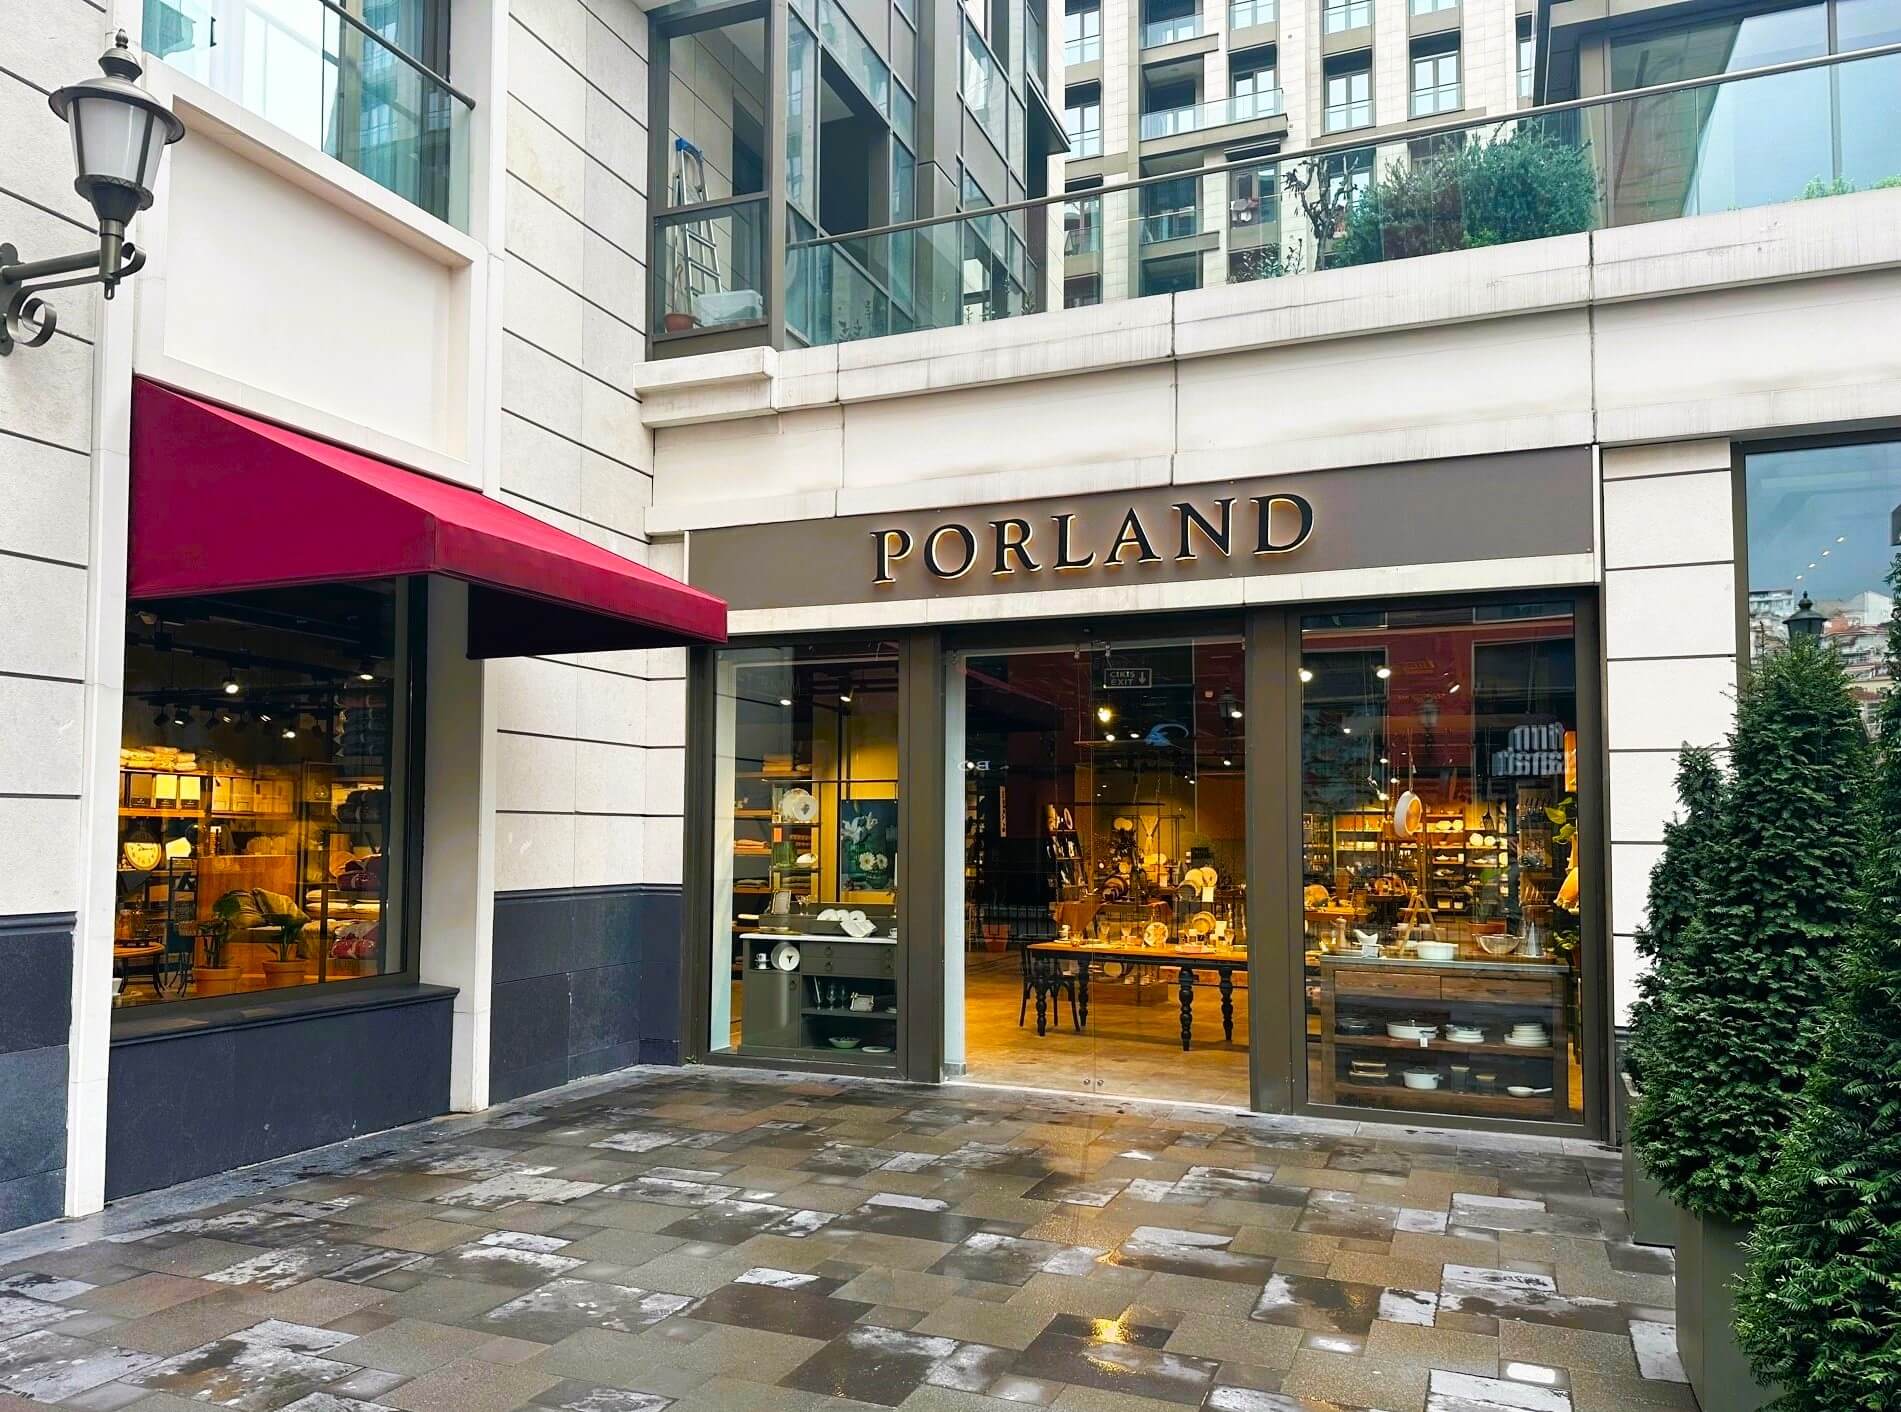 Porland opened in Piyalepaşa Plaza.